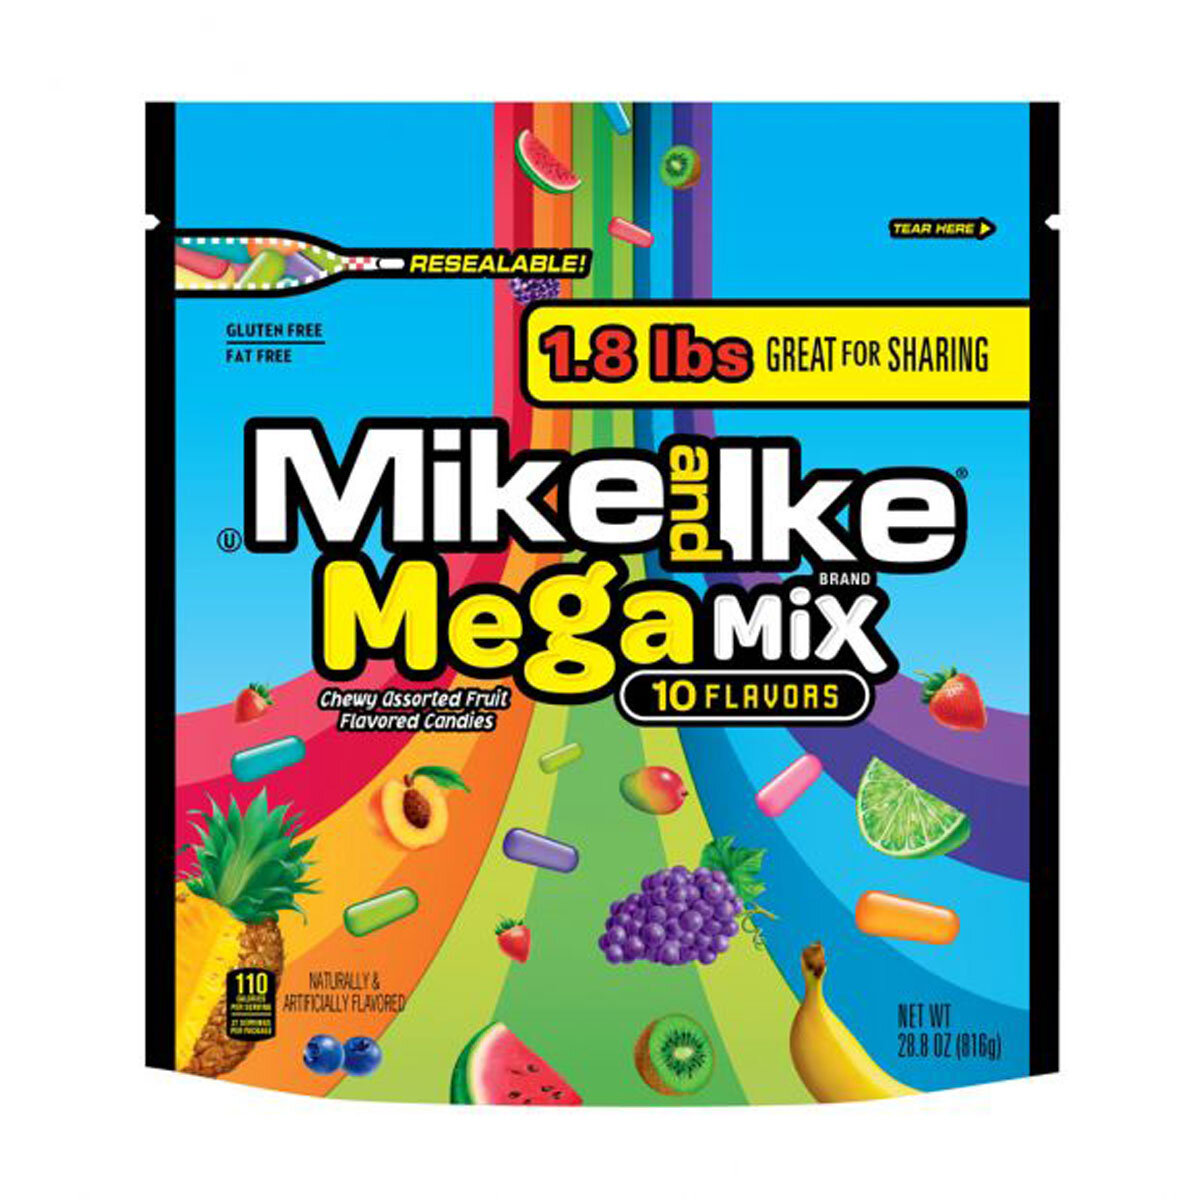 Mike & Ike Mega Mix, 816g